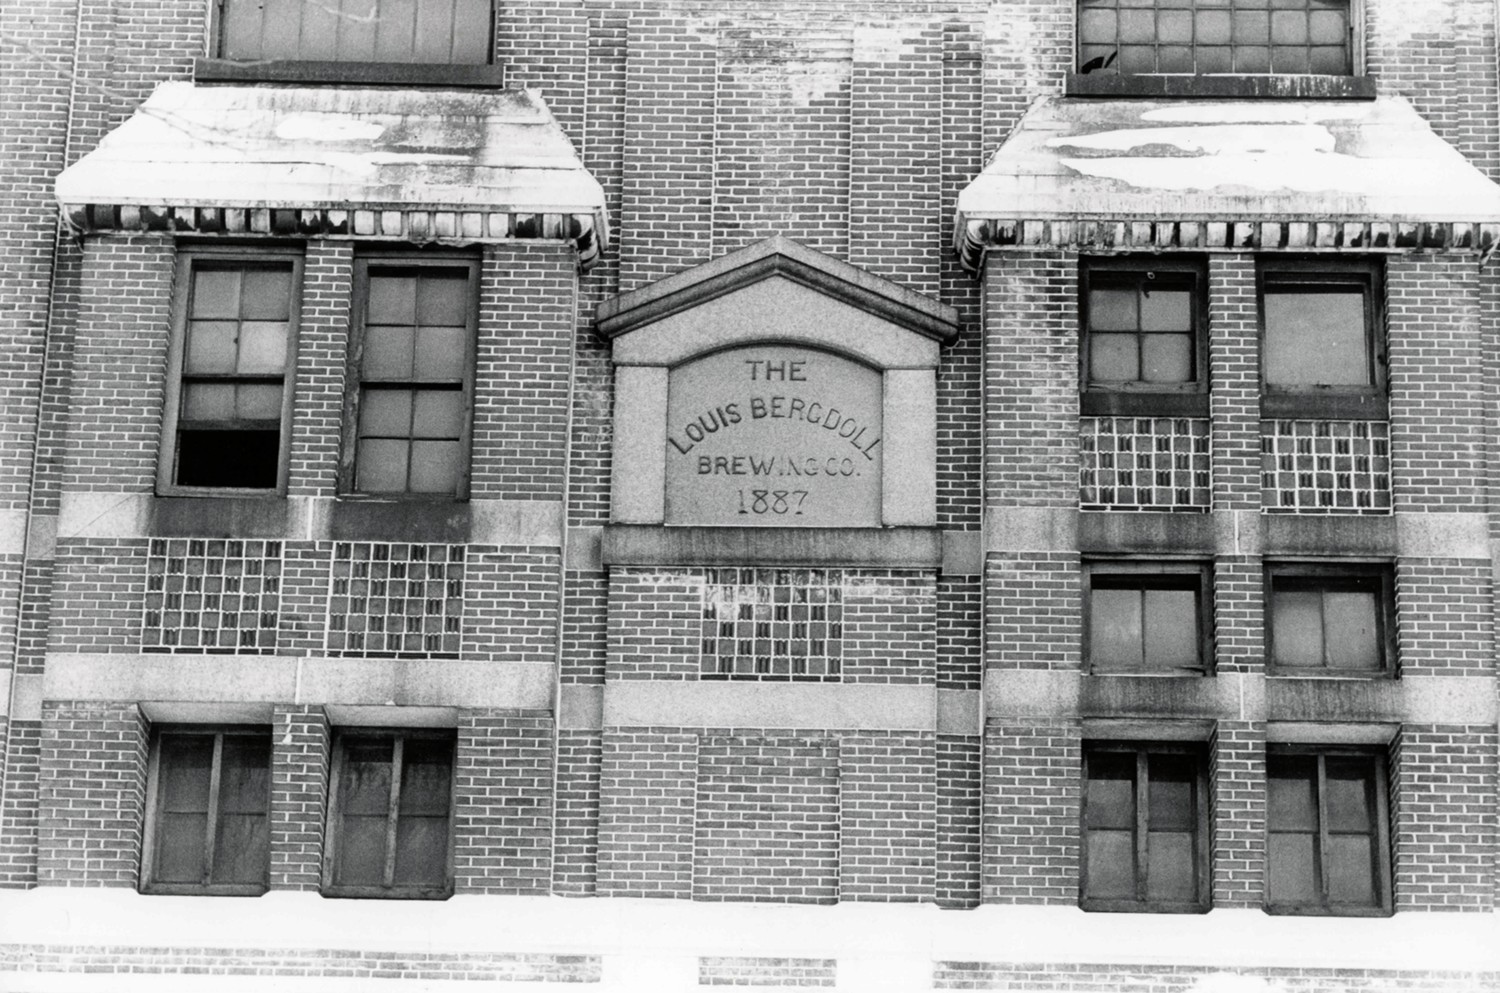 Bergdoll Brewery - City Park Brewery, Philadelphia Pennsylvania Looking at datestone in facade of Bldg. 2A (1979)